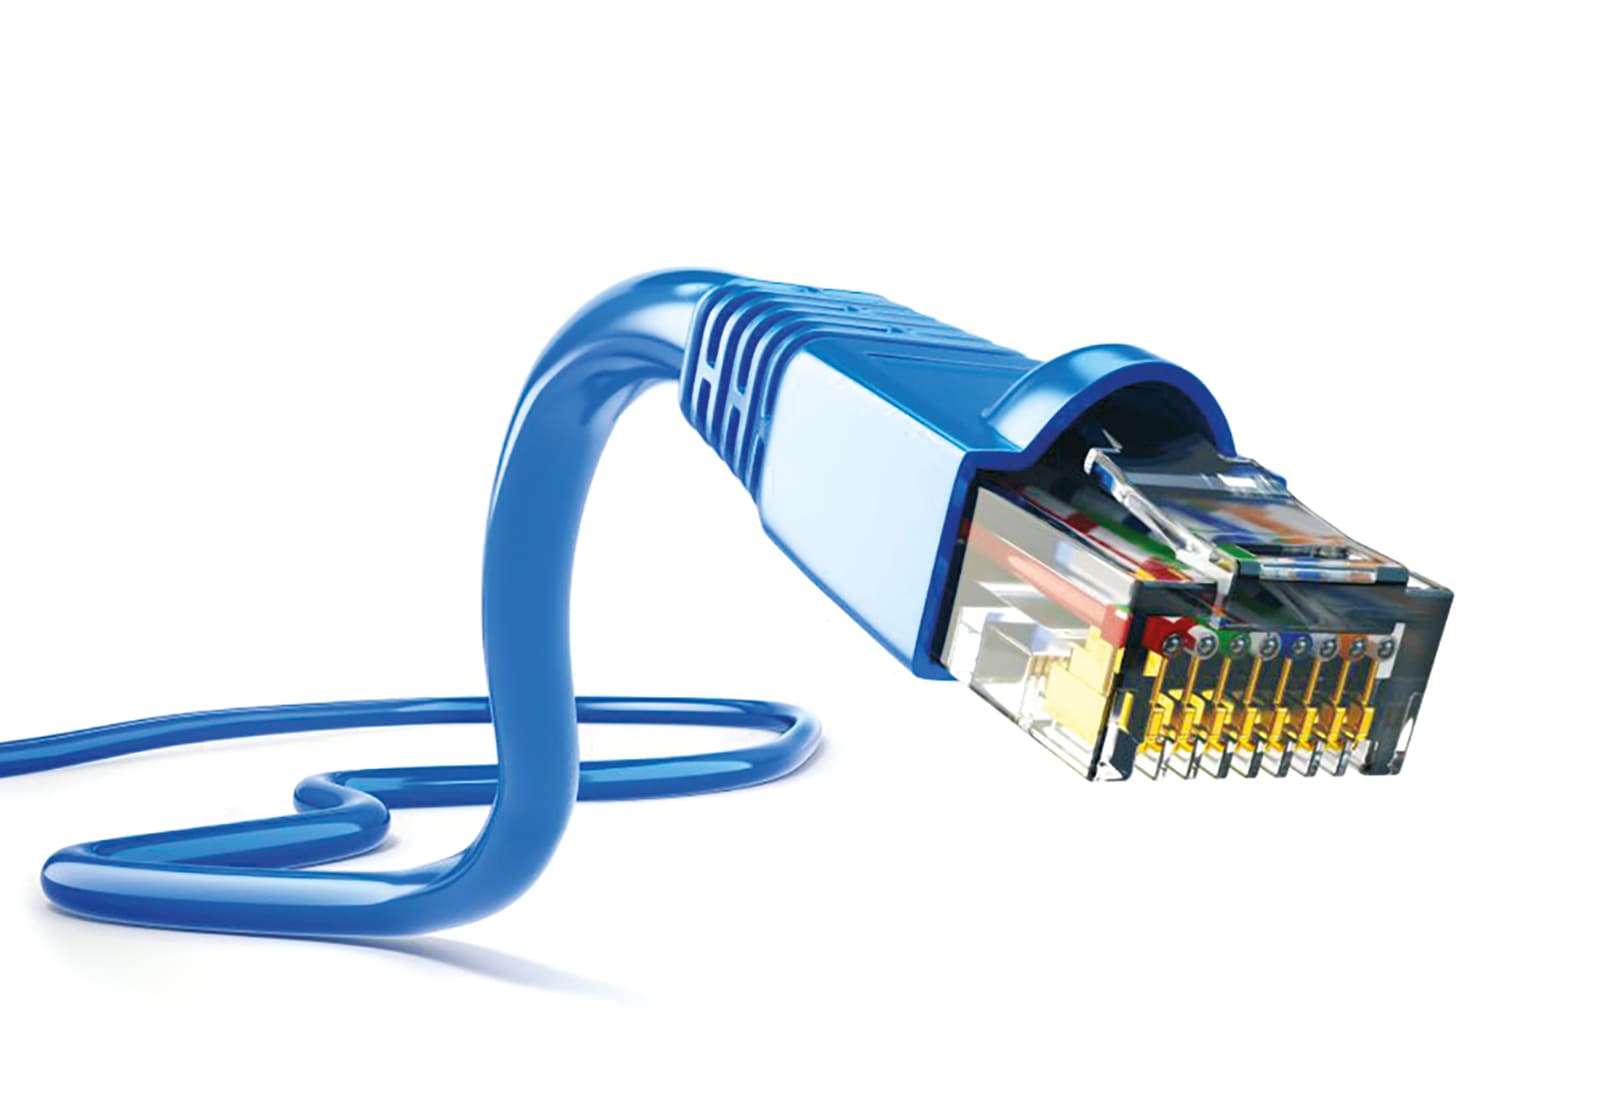 Câbles Ethernet